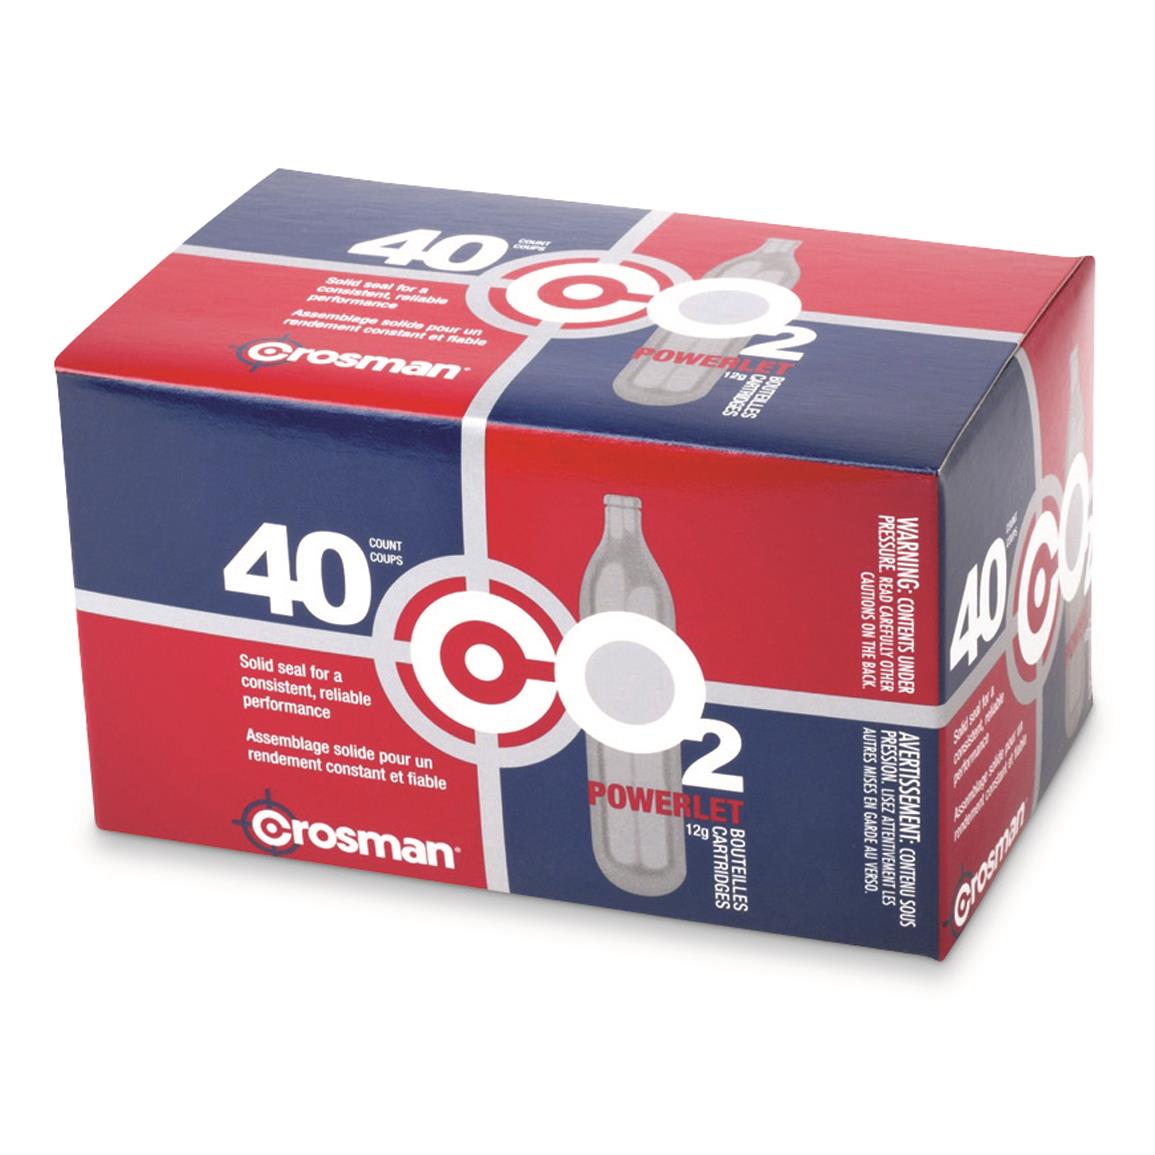 Crosman Powerlet CO2 Cartridges 40 Pack NEW C-20 